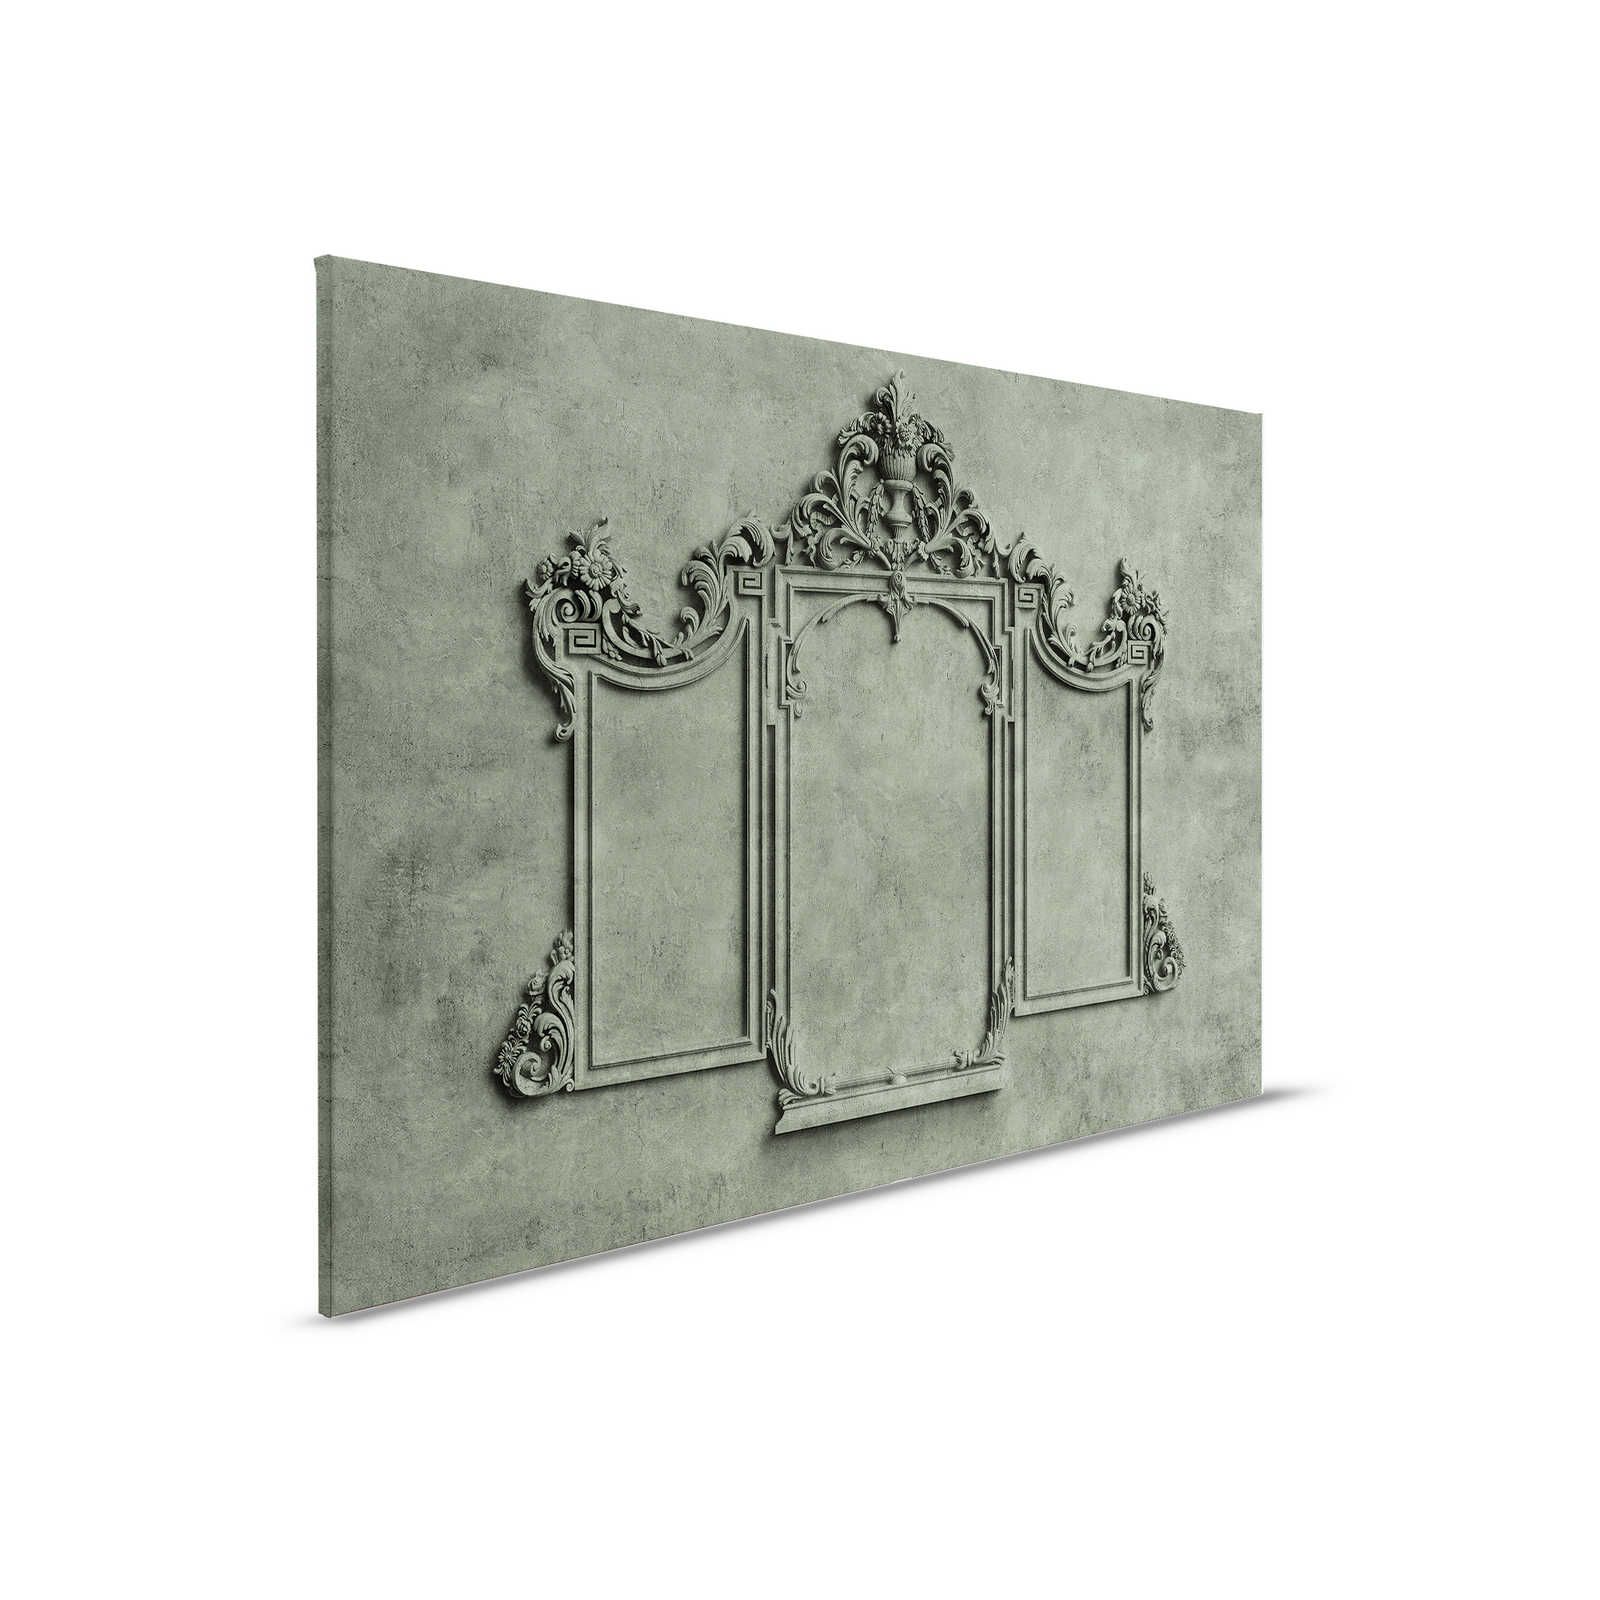 Lyon 2 - Canvas schilderij 3D stucco frame & gipslook in groen - 0.90 m x 0.60 m
